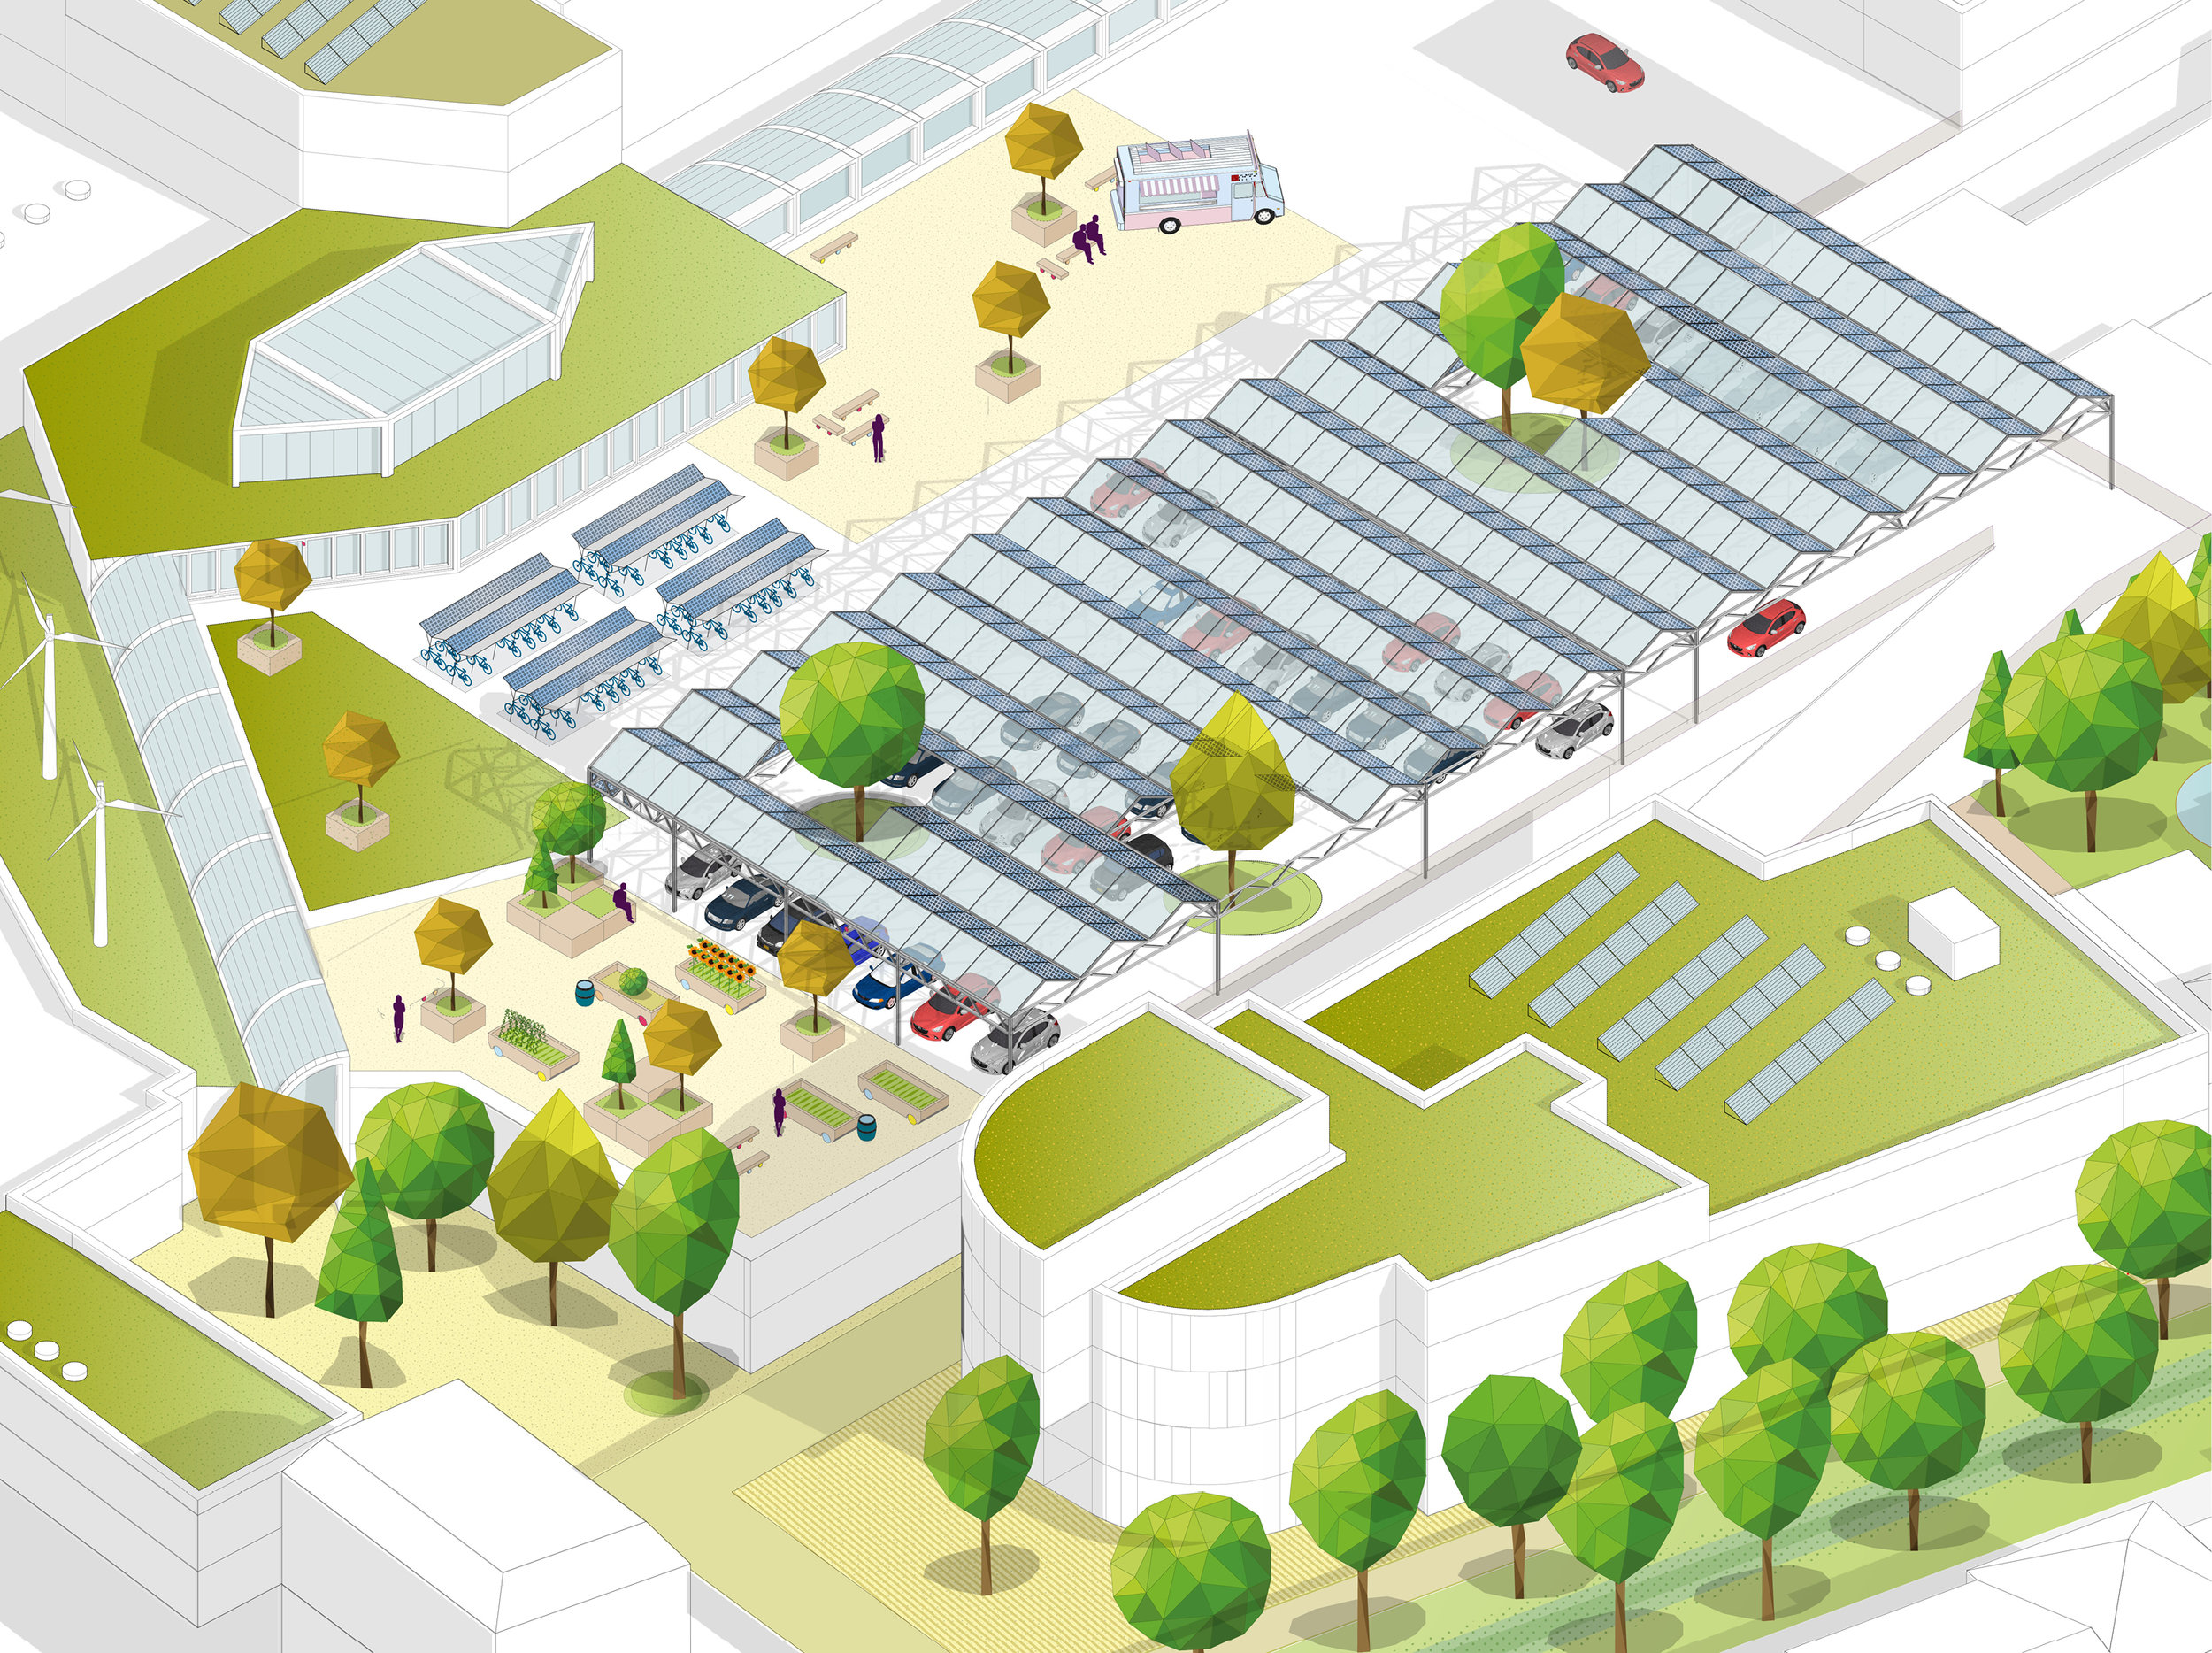   Weerbaar Weert   the history of Weert as inspiration for a greener, cooler, and livable city 